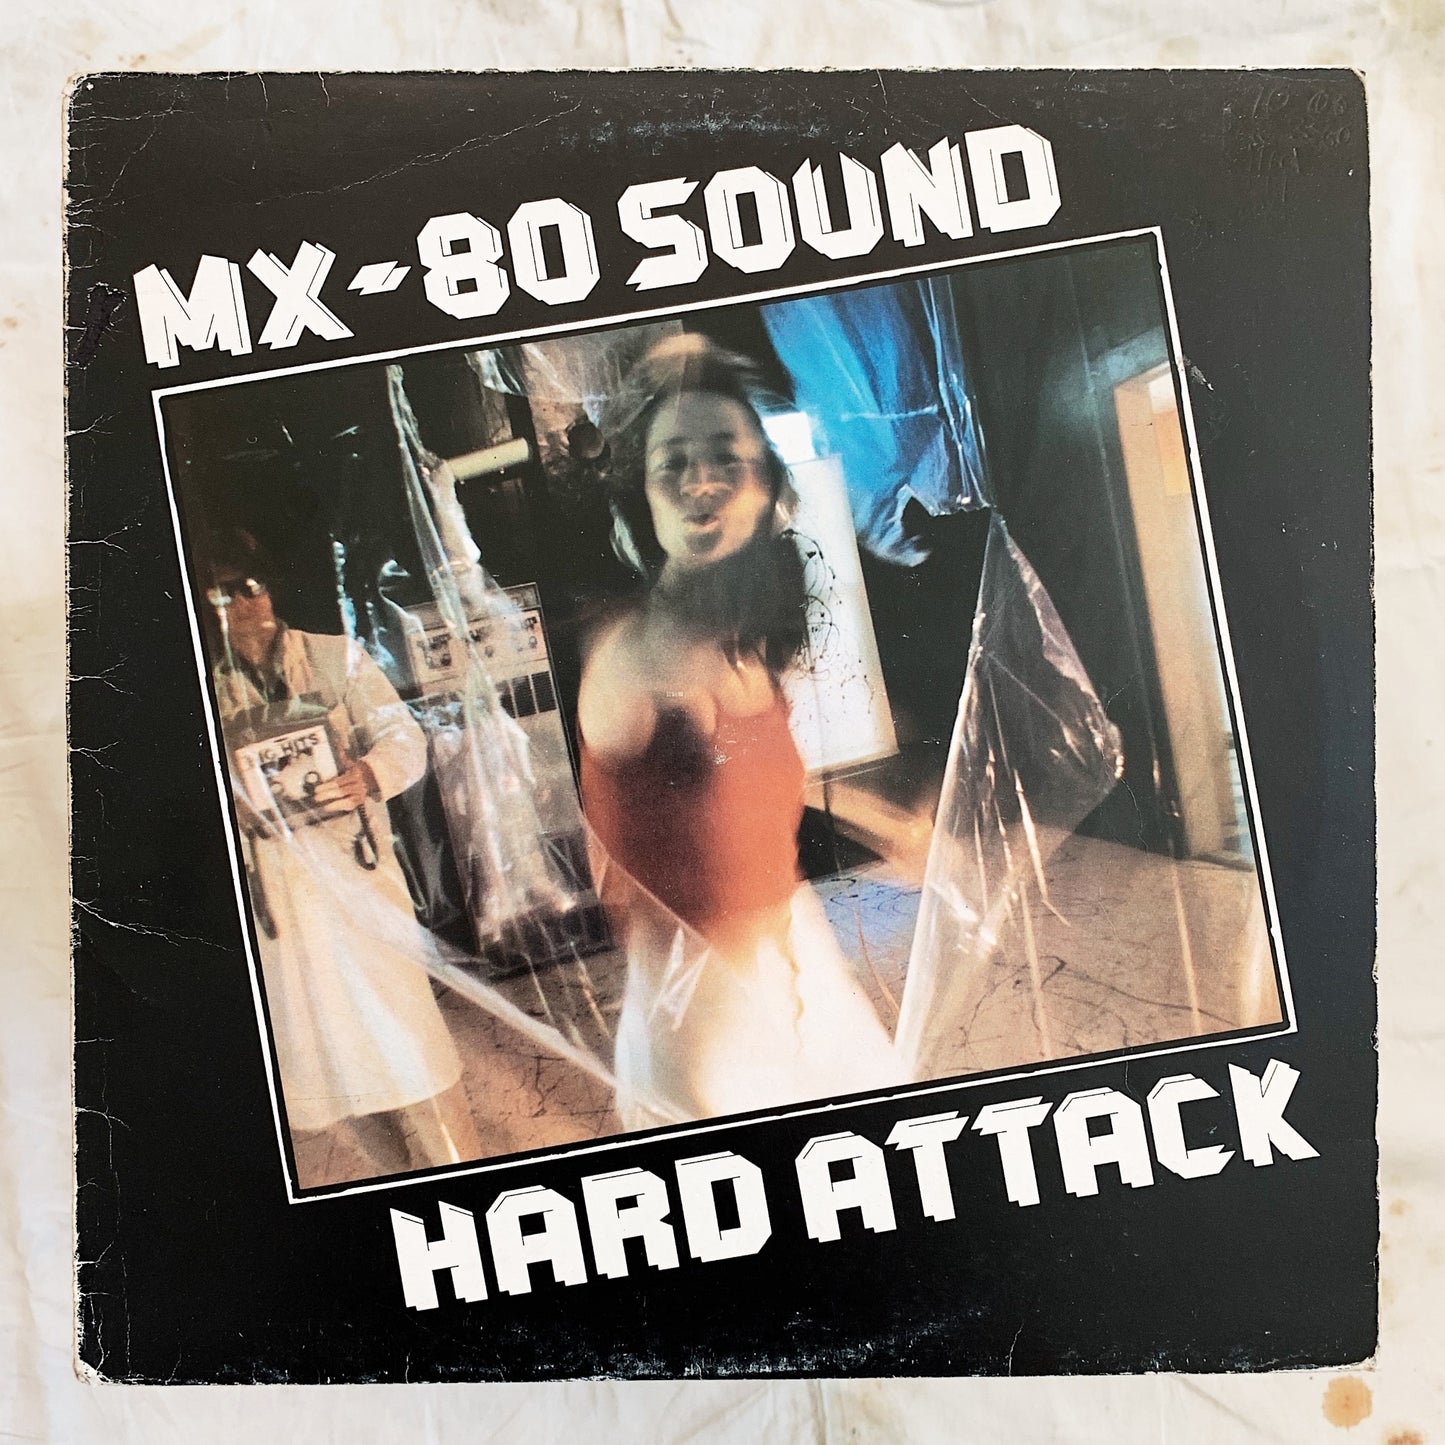 MX-80 Sound / Hard Attack LP